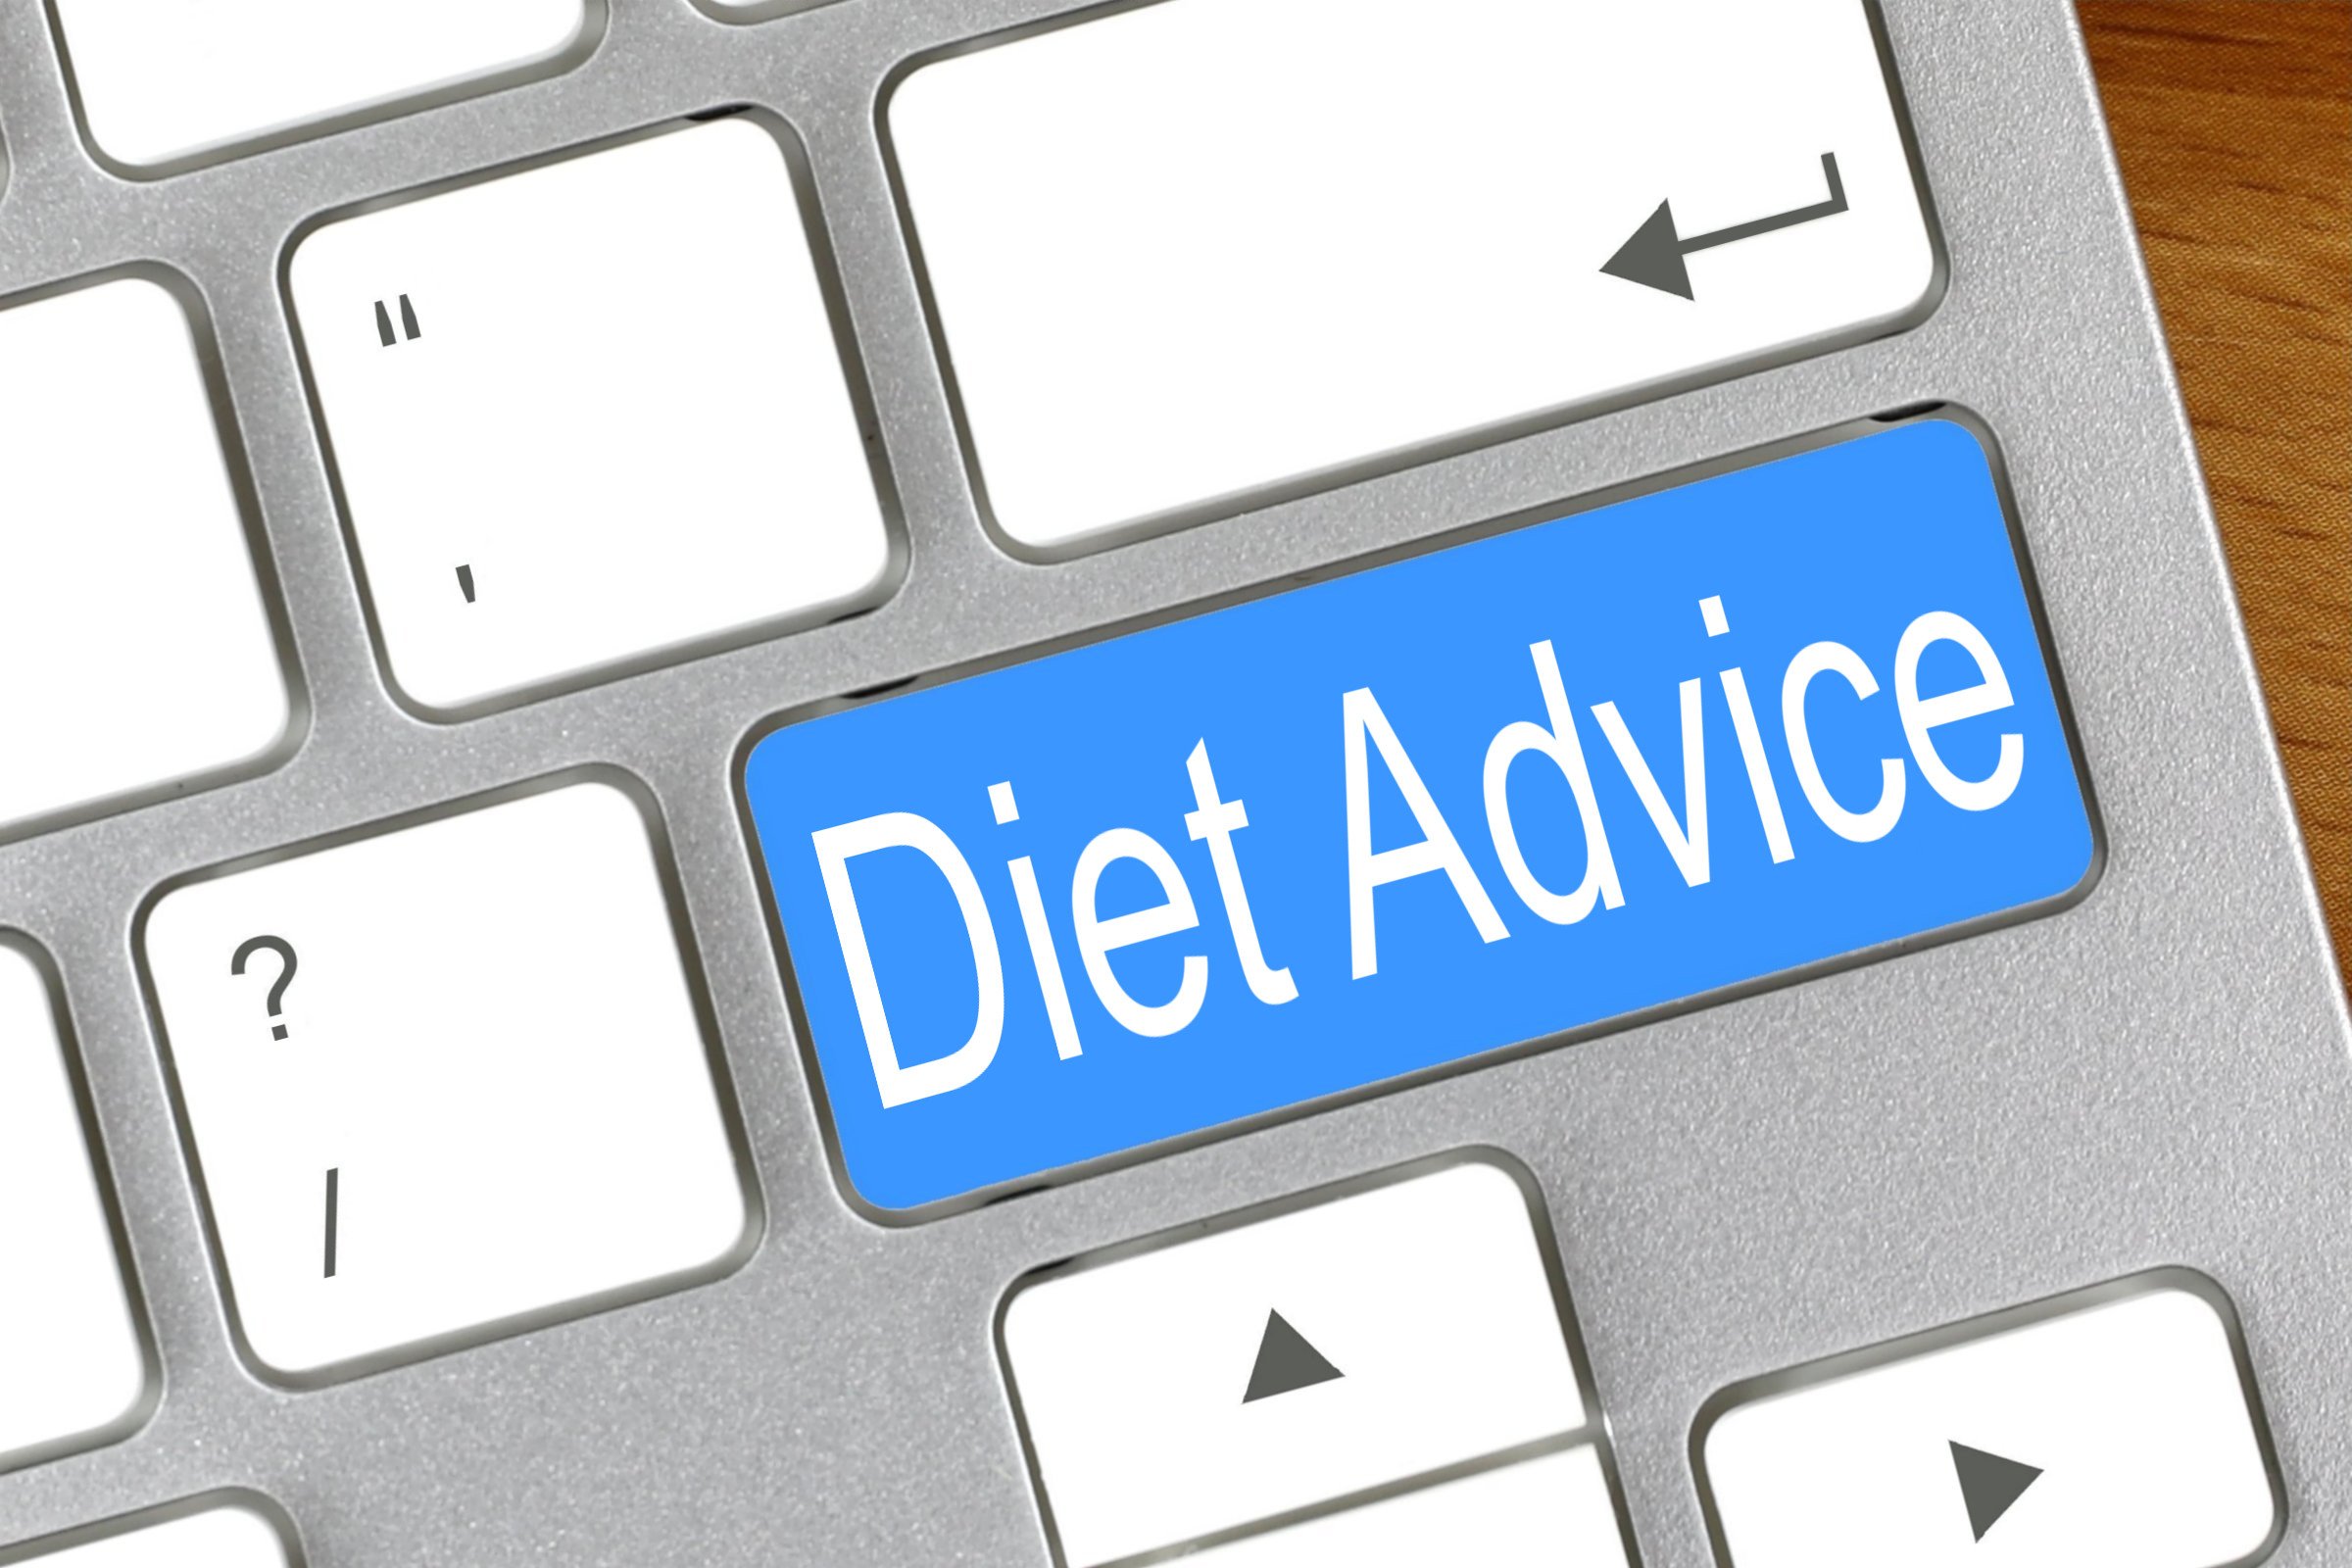 diet advice